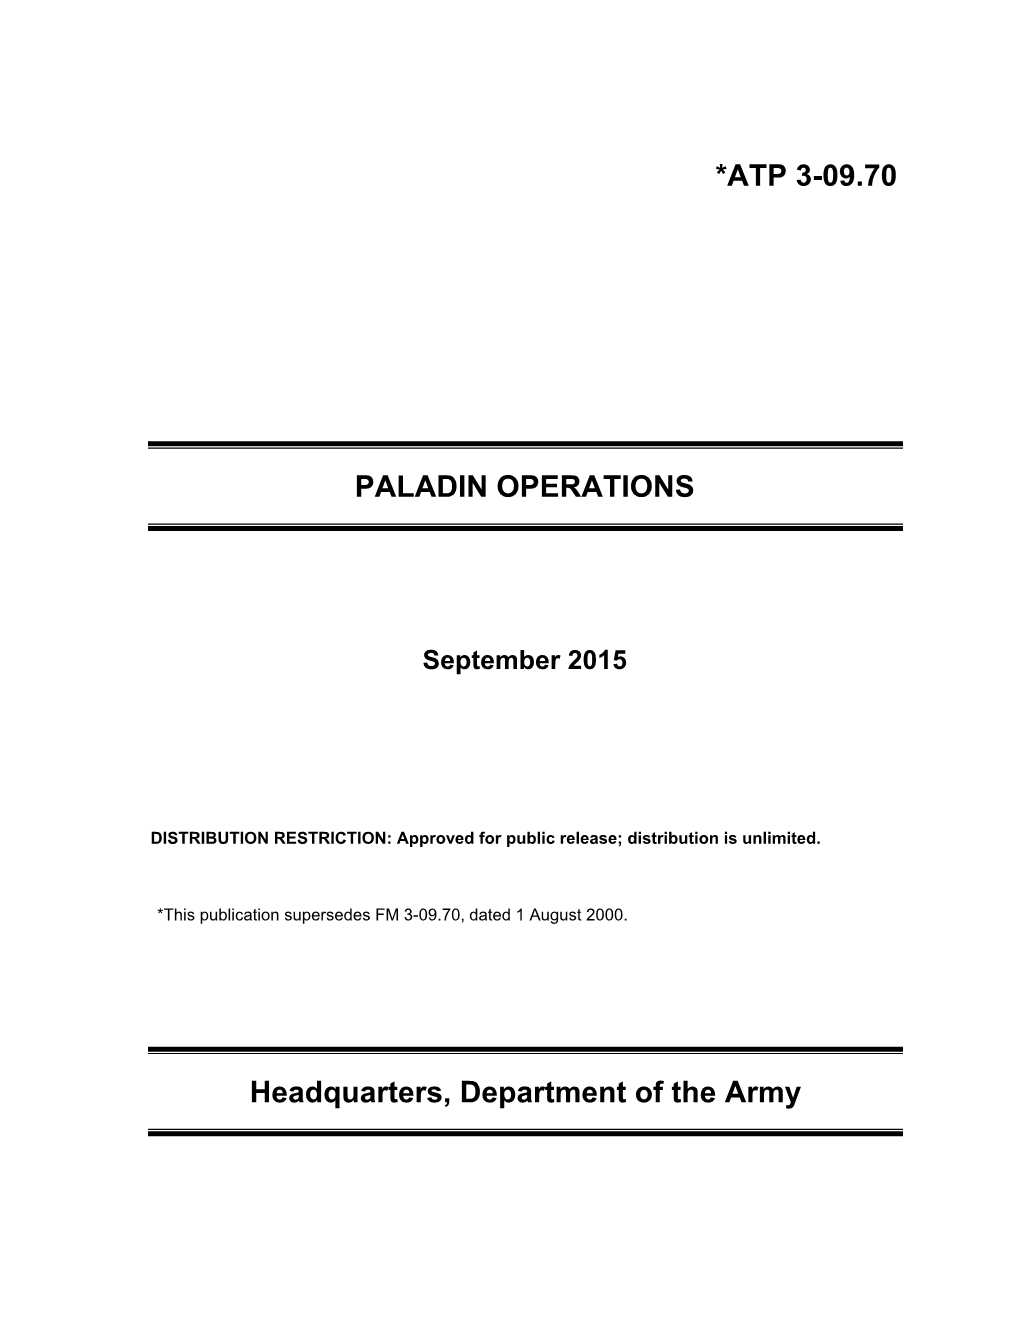 ATP 3-09.70: Paladin Operations